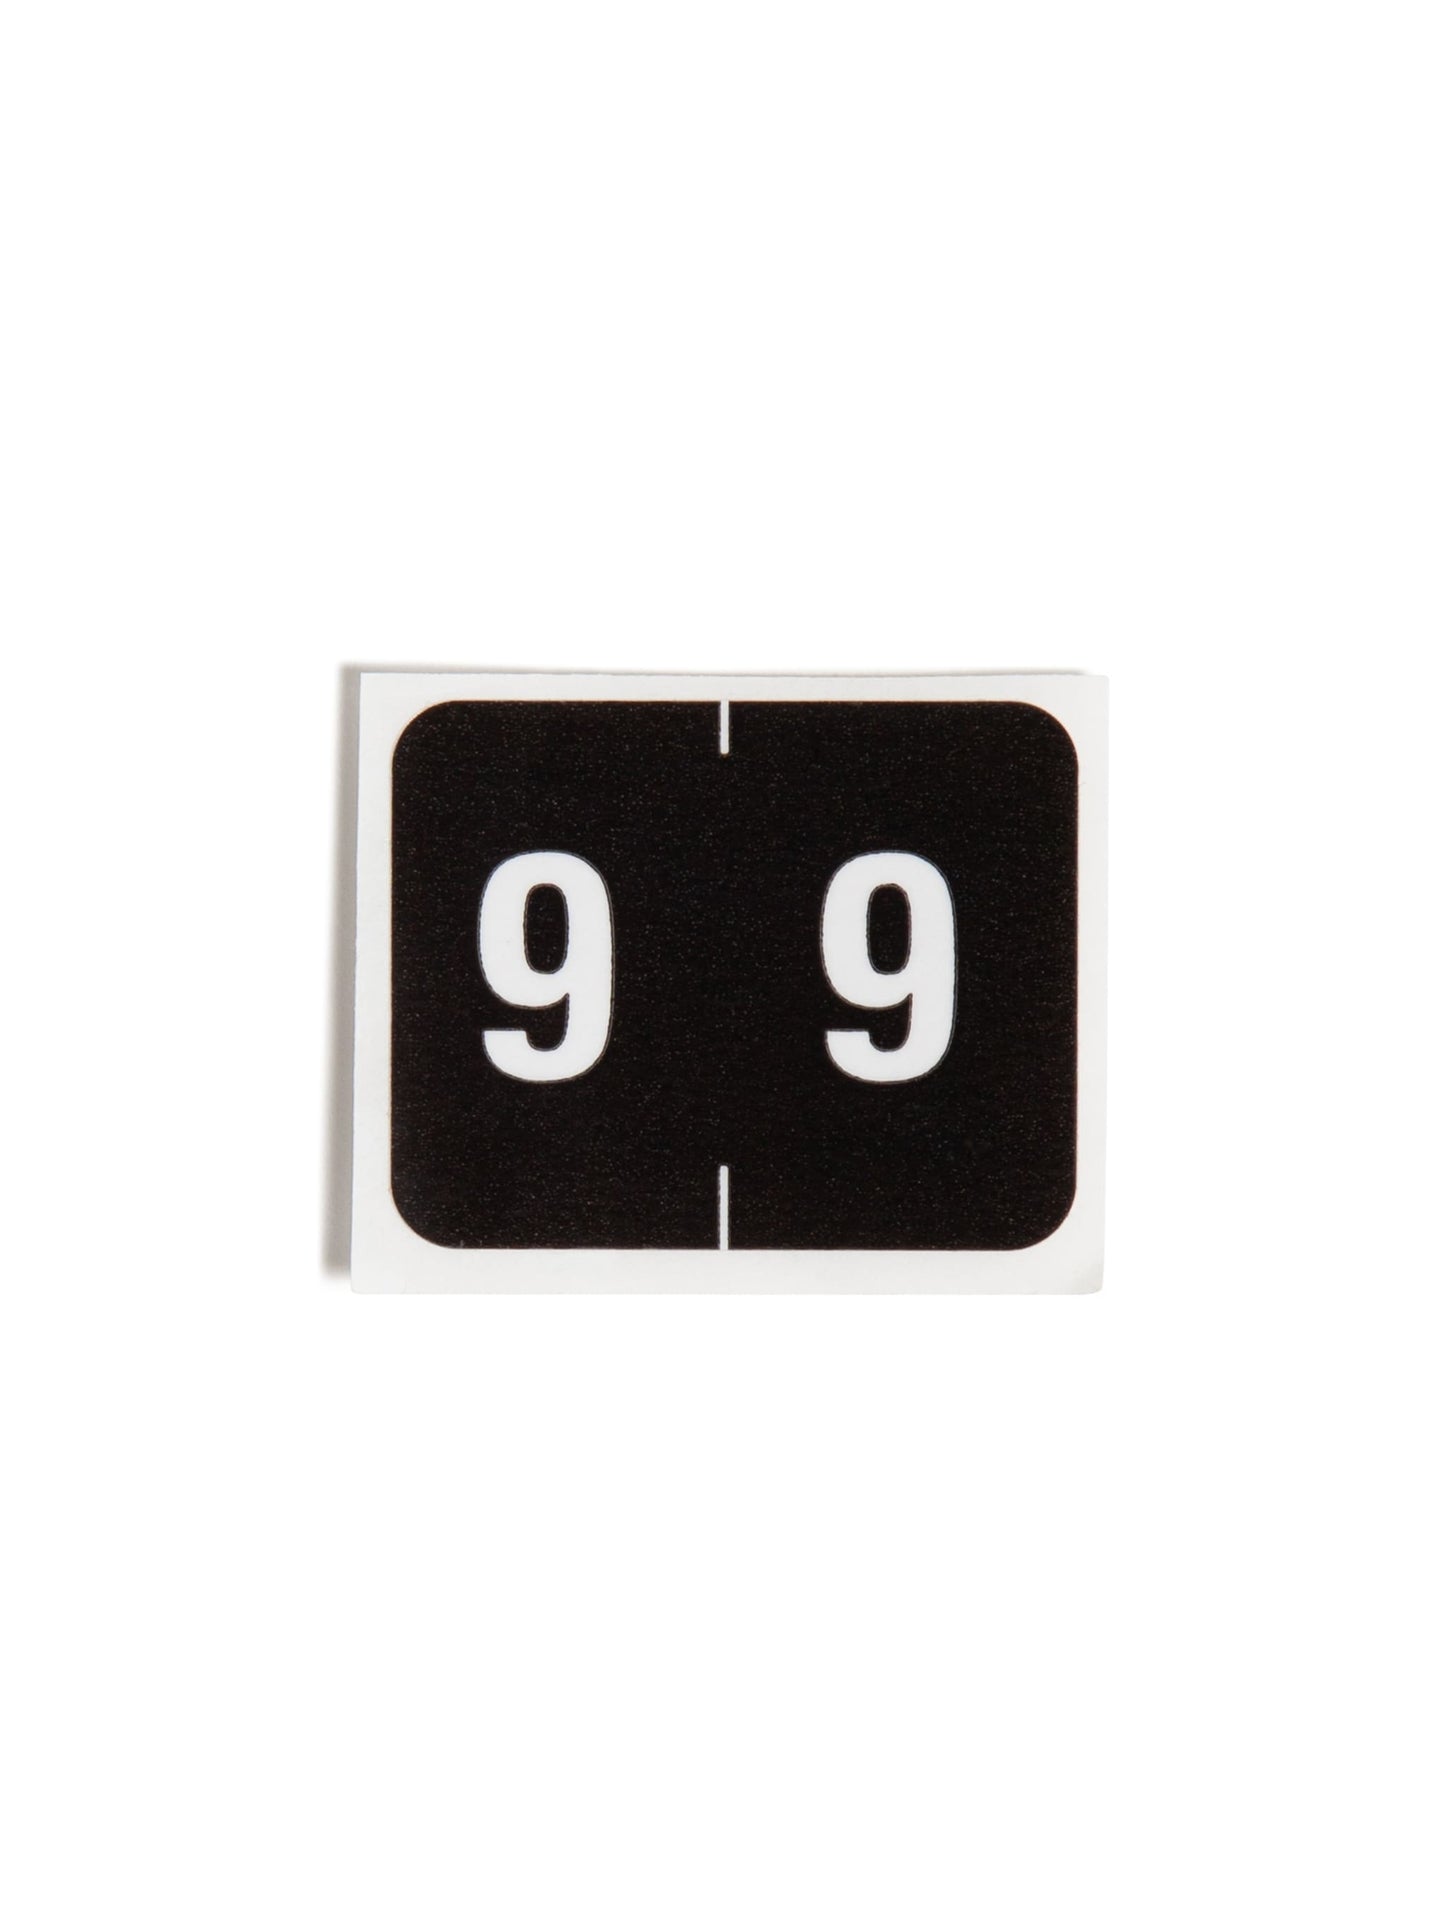 DCCRN Color-Coded Numeric Labels - Rolls, Black Color, 1-1/4" X 1" Size, Set of 1, 086486673495